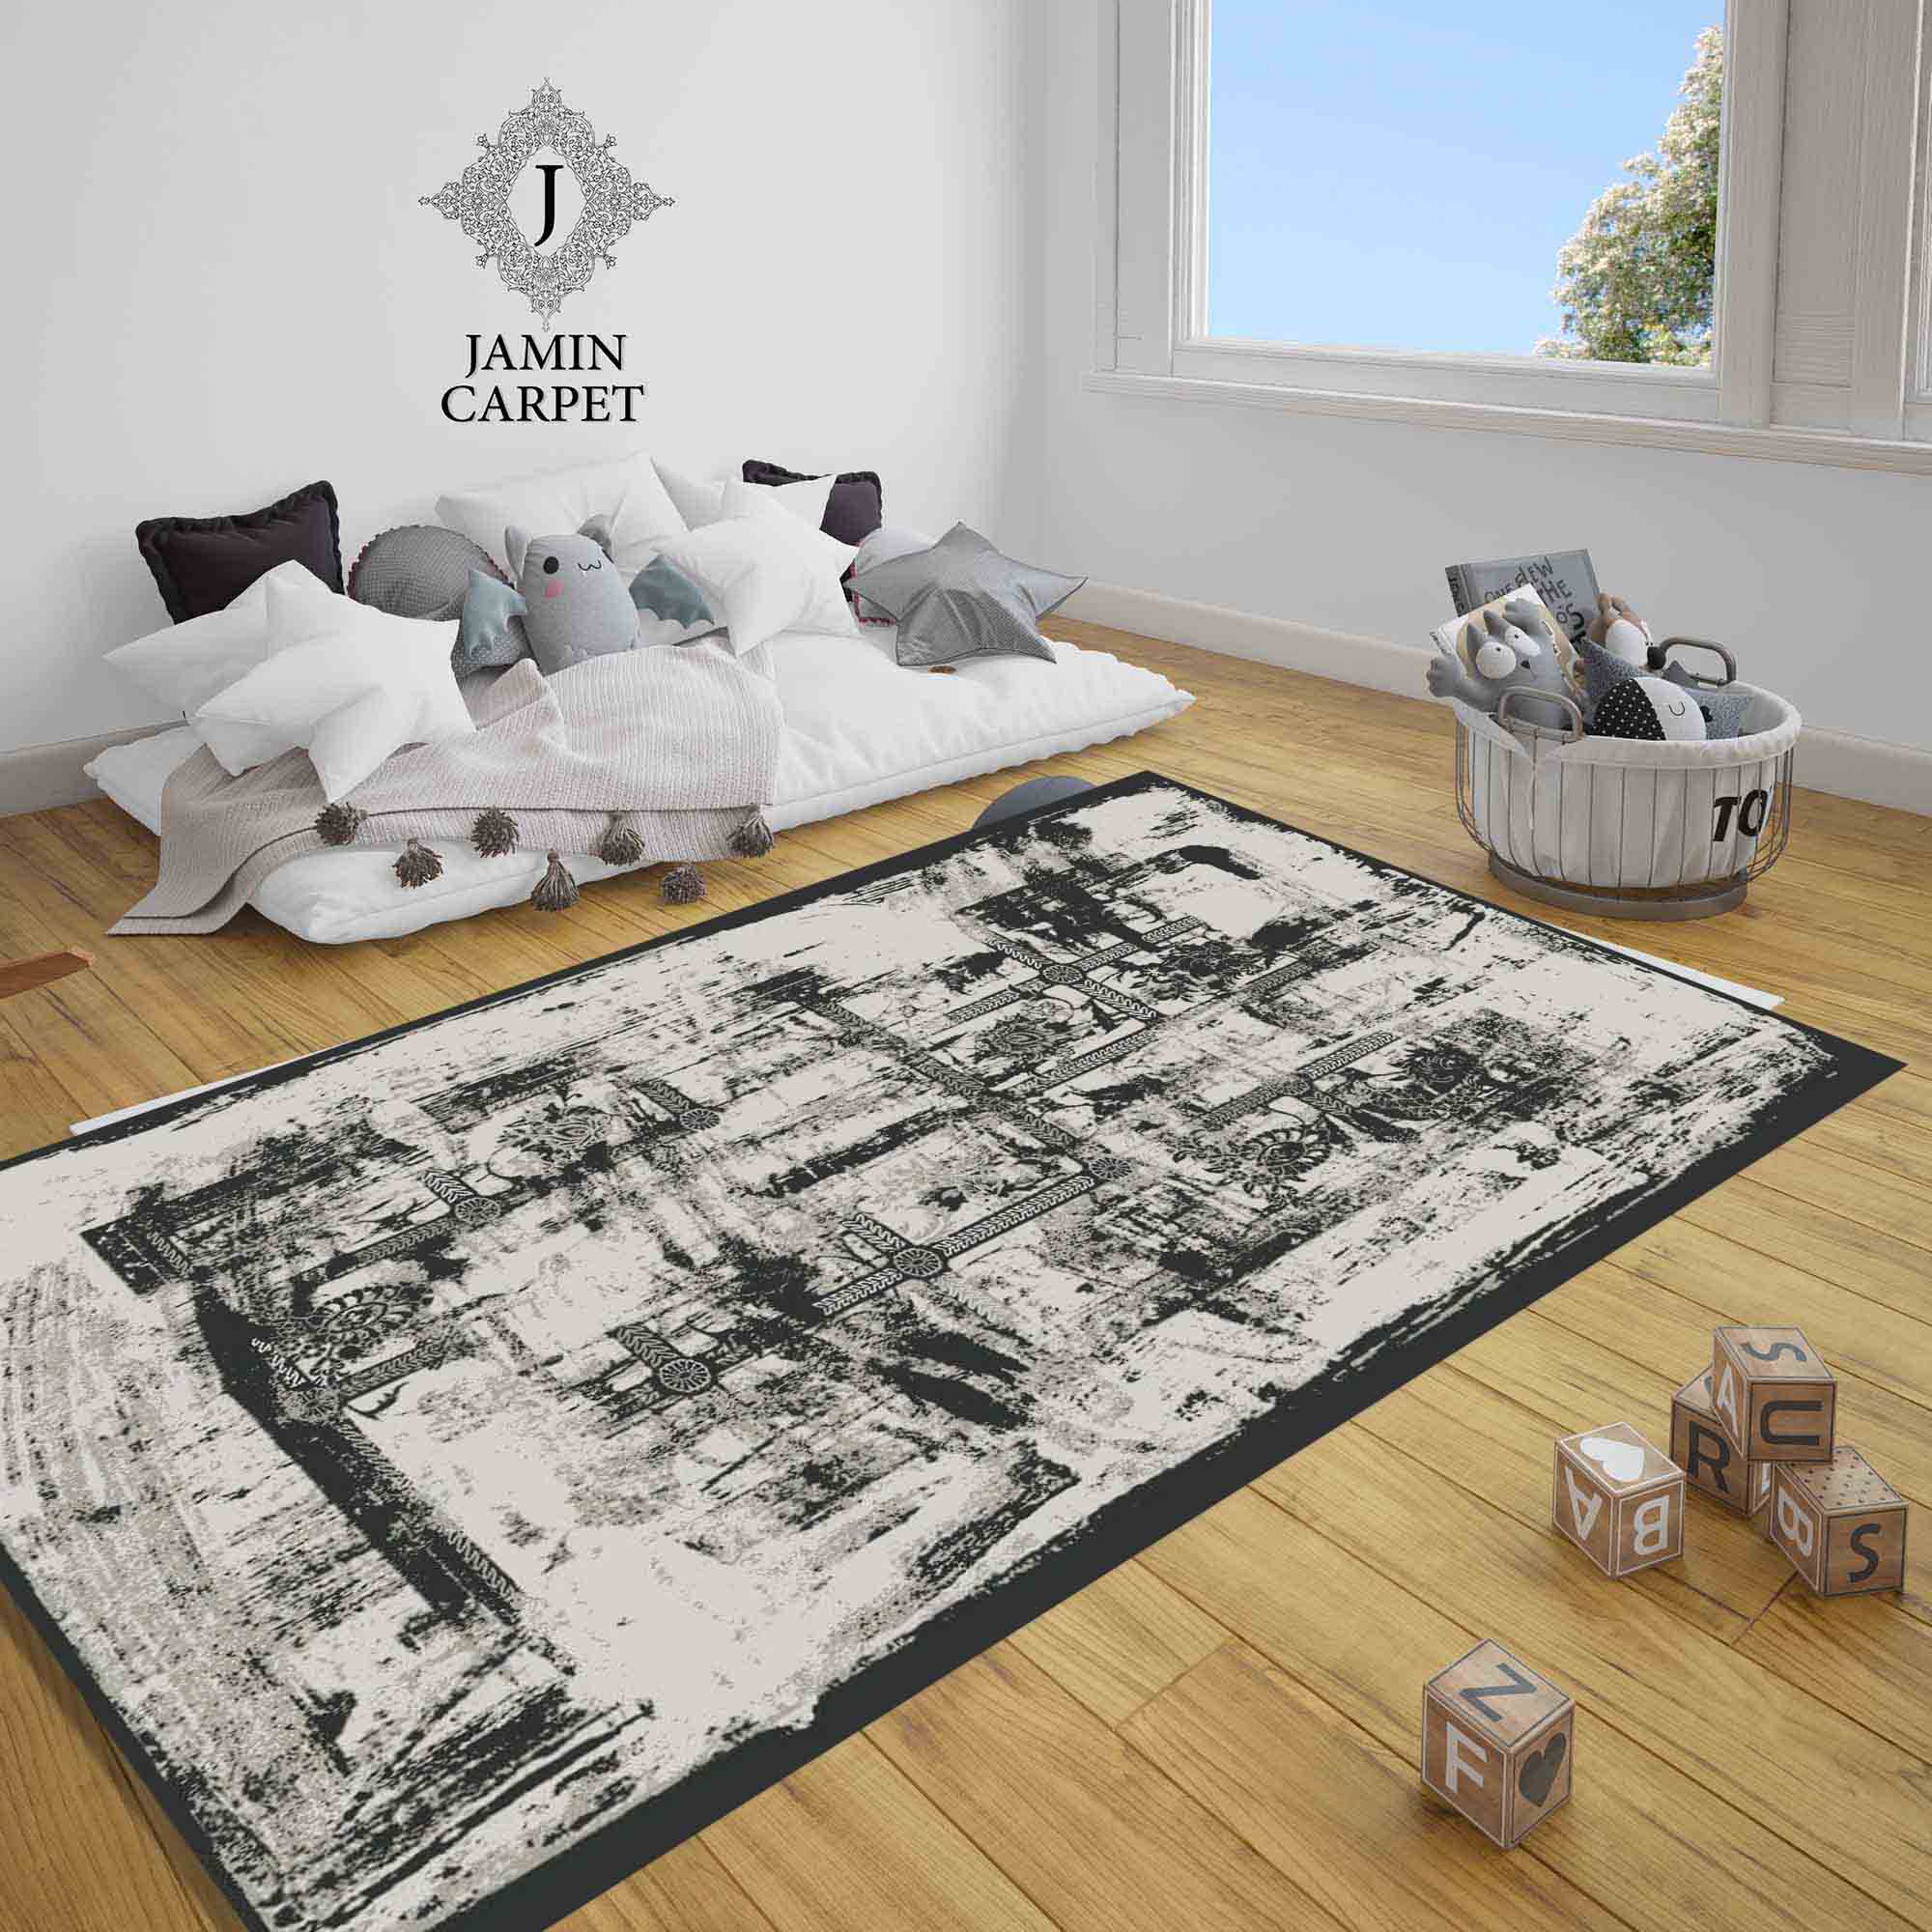 Fantasy carpet, code 245, comb 400, density 1800, all acrylic